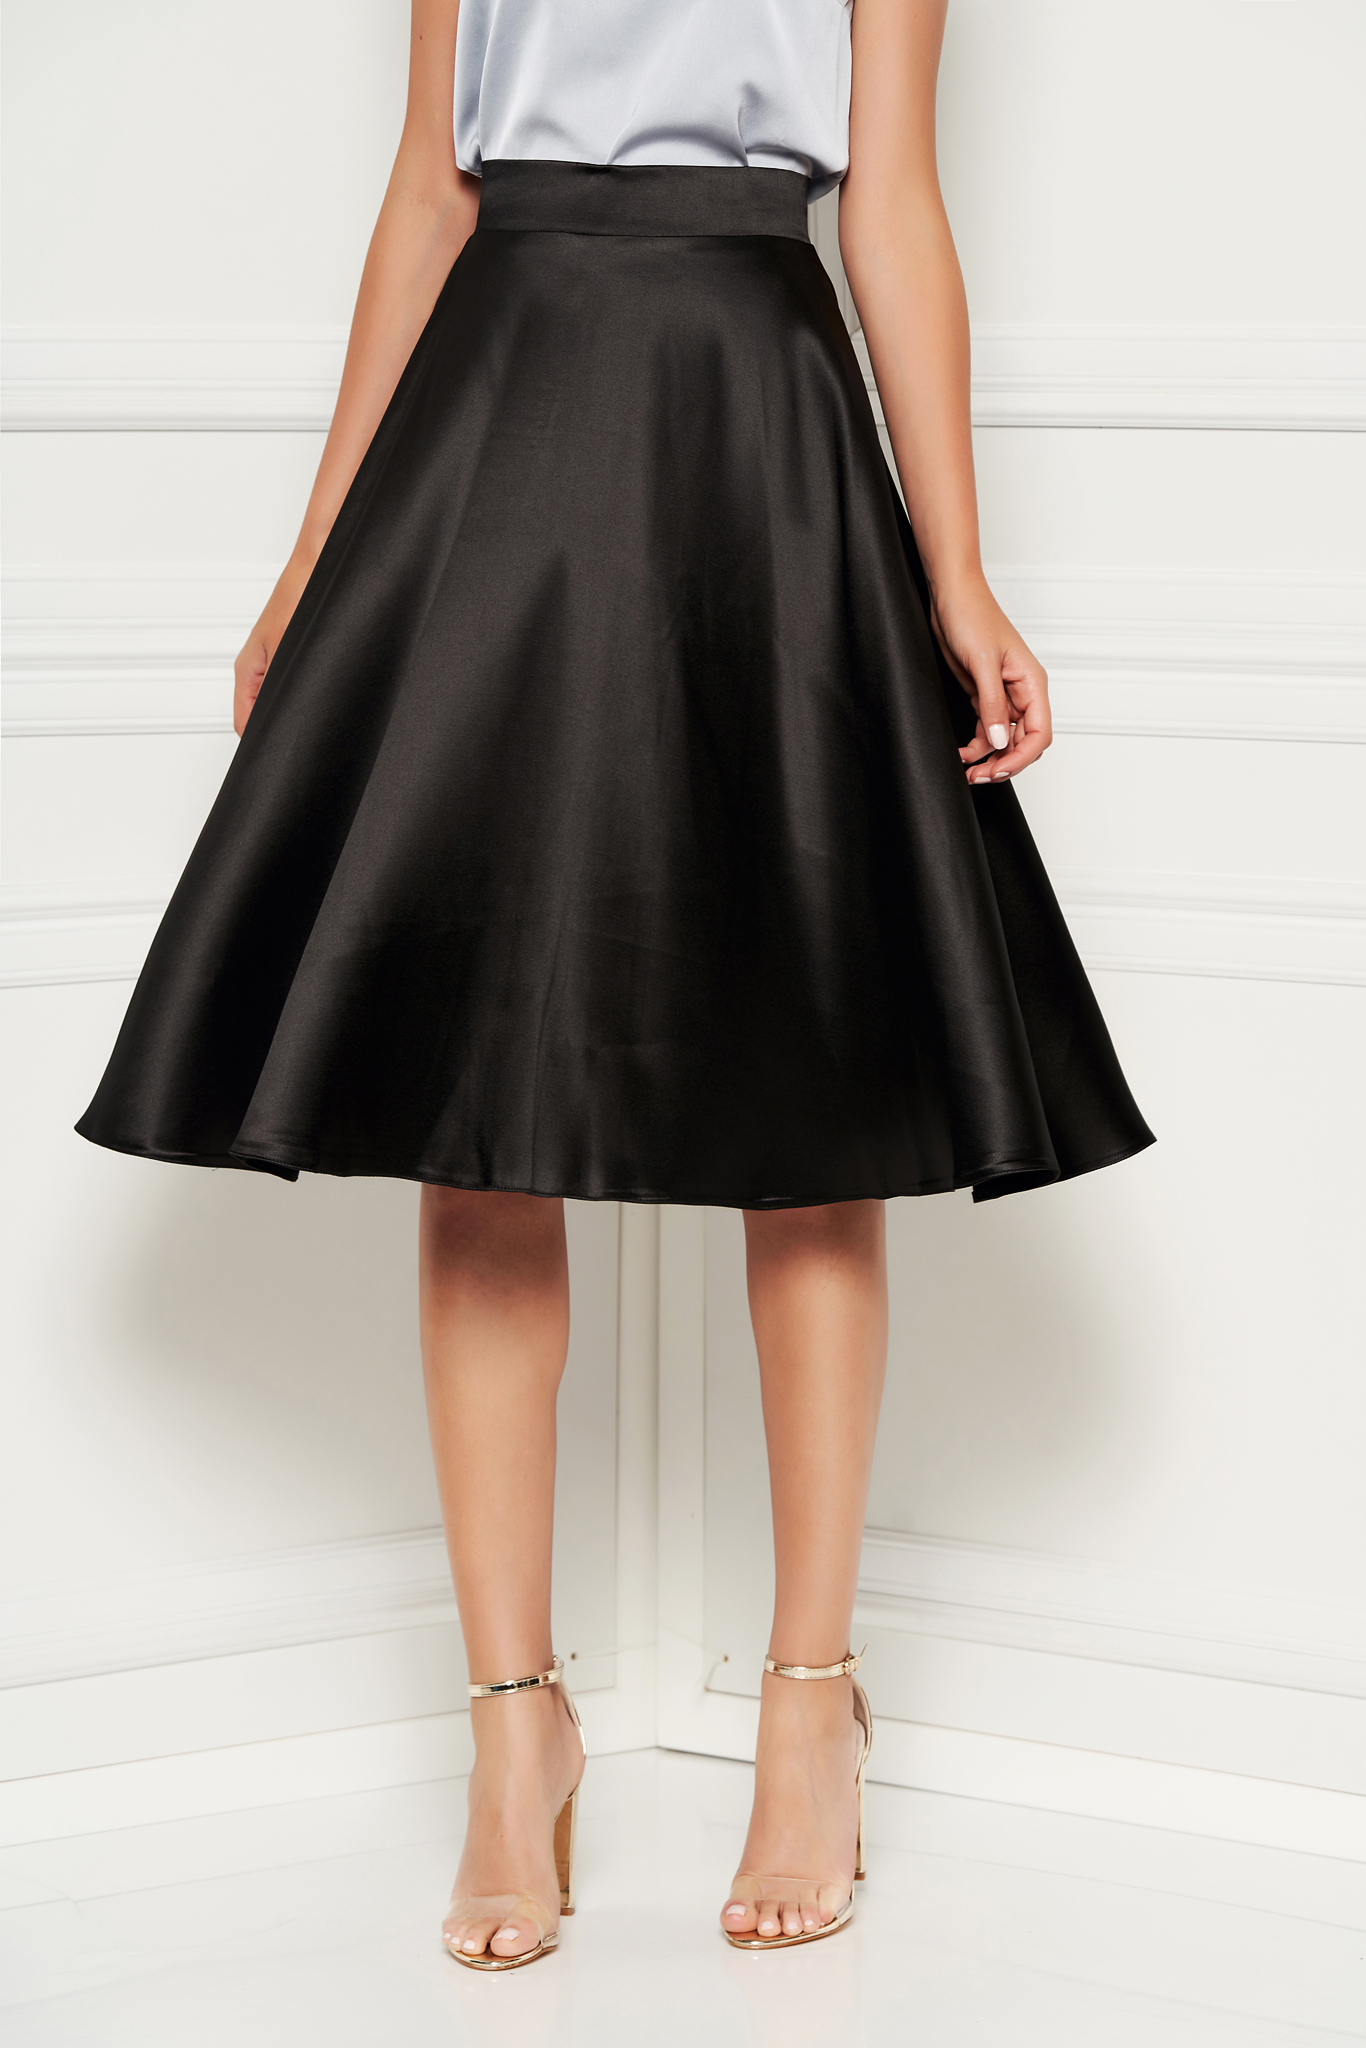 Starshiners Black Elegant High Waisted Cloche Skirt From Satin 5328